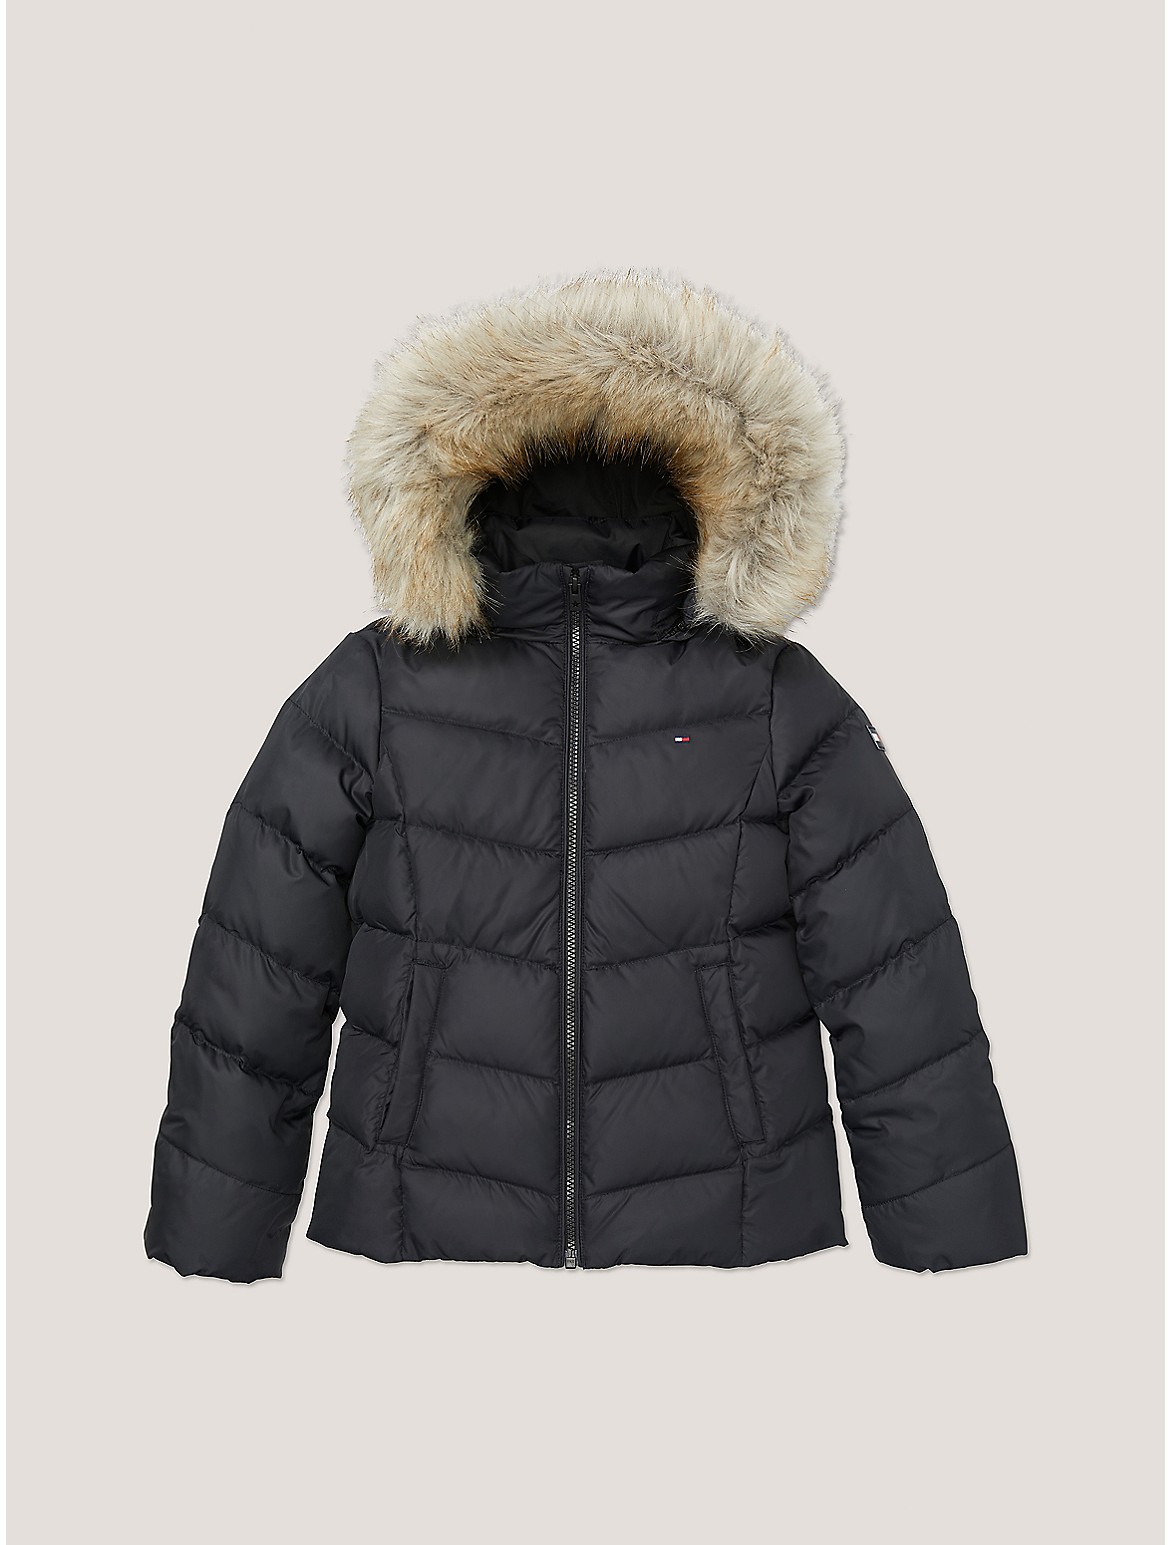 Tommy Hilfiger Girls' Kids' Faux Fur Hood Puffer Jacket